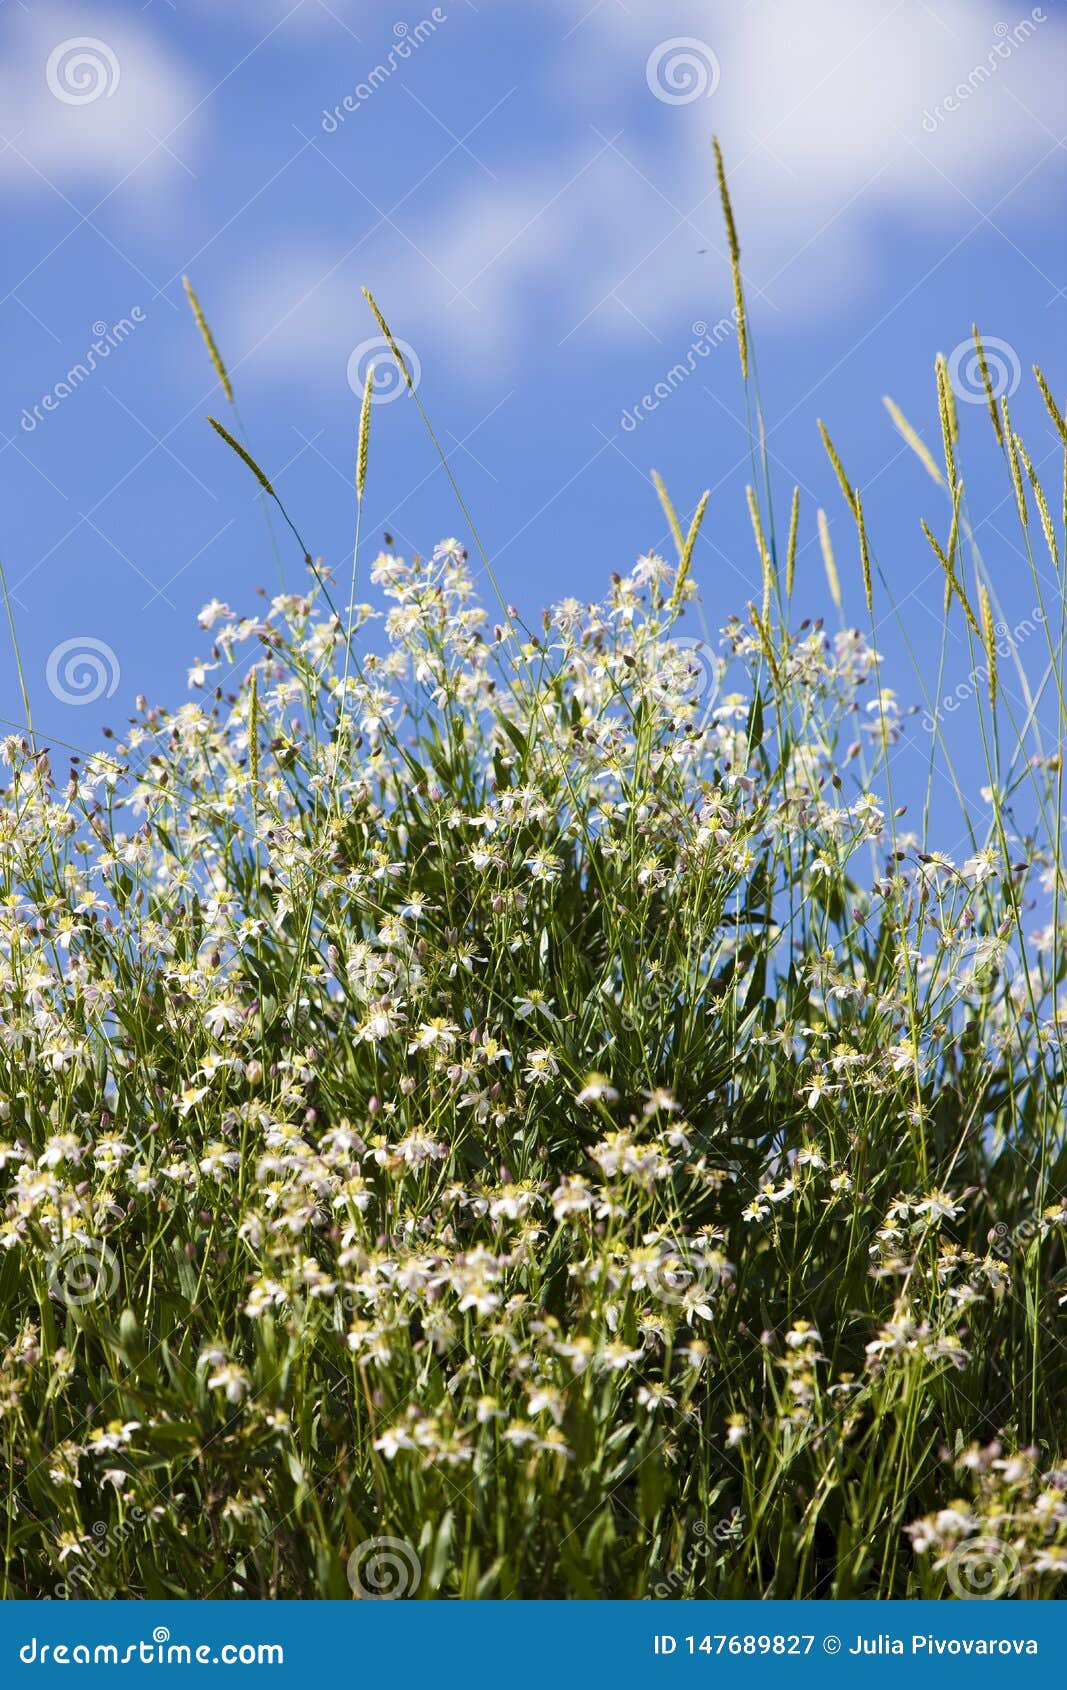 caryophyllaceae / gypsophila sp. white flowers. plateau assy